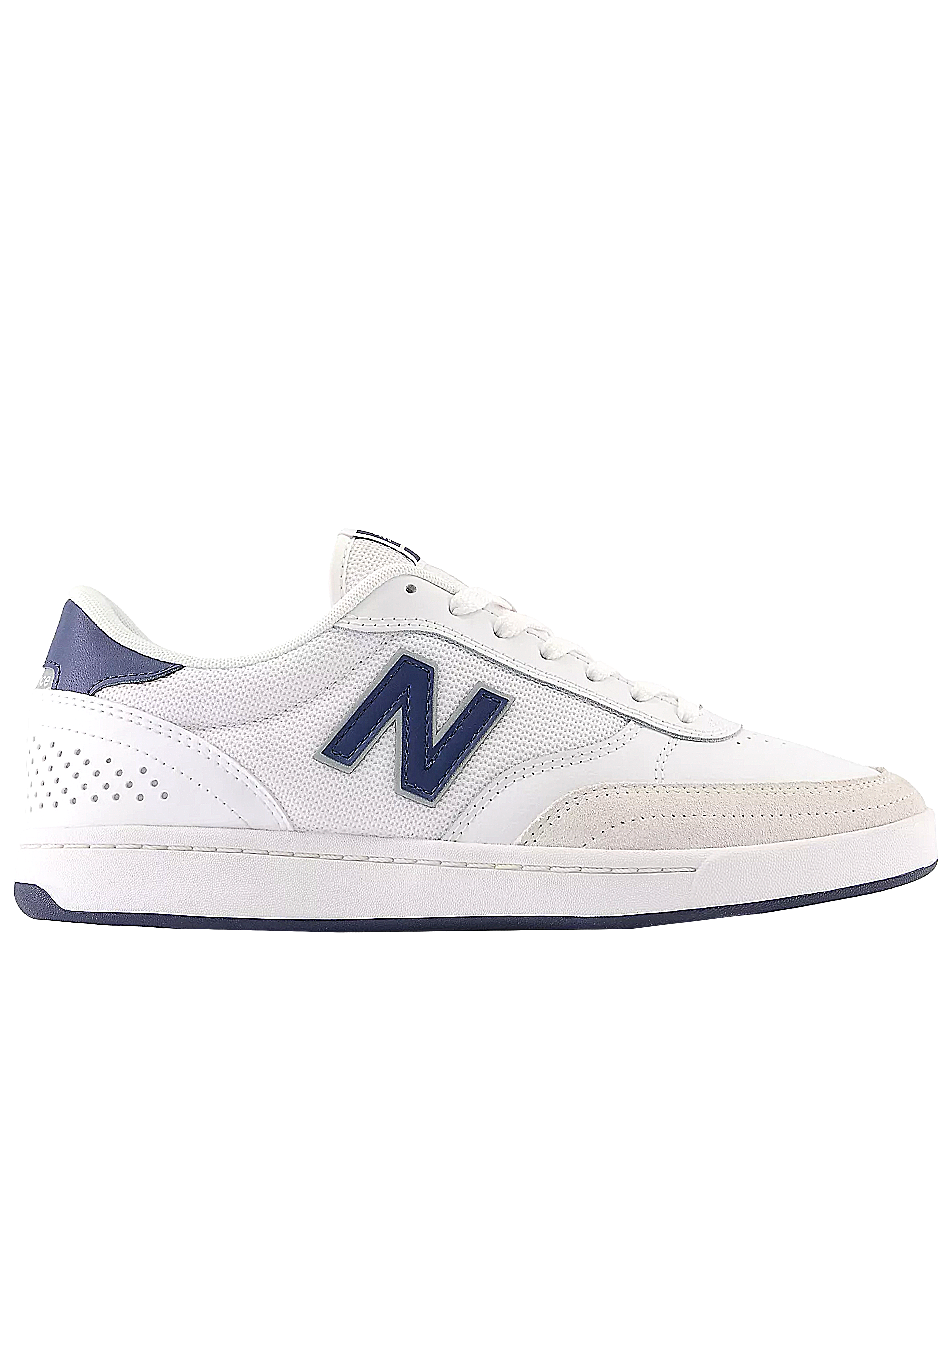 NM440ZTS Shoe White Navy